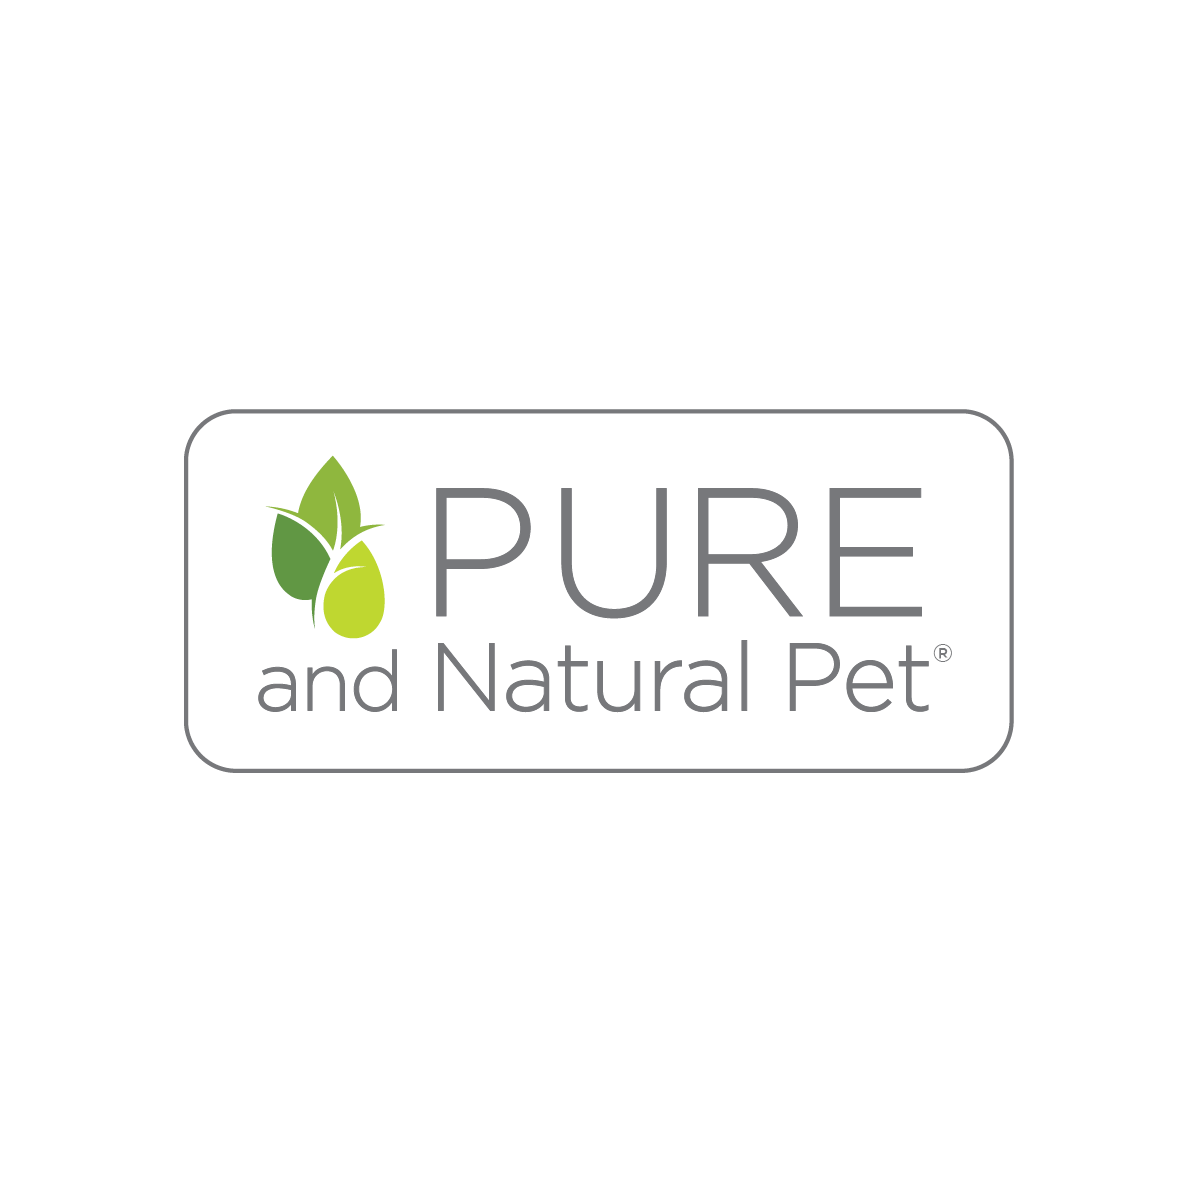 Pure and Natural Pet® Logo Image